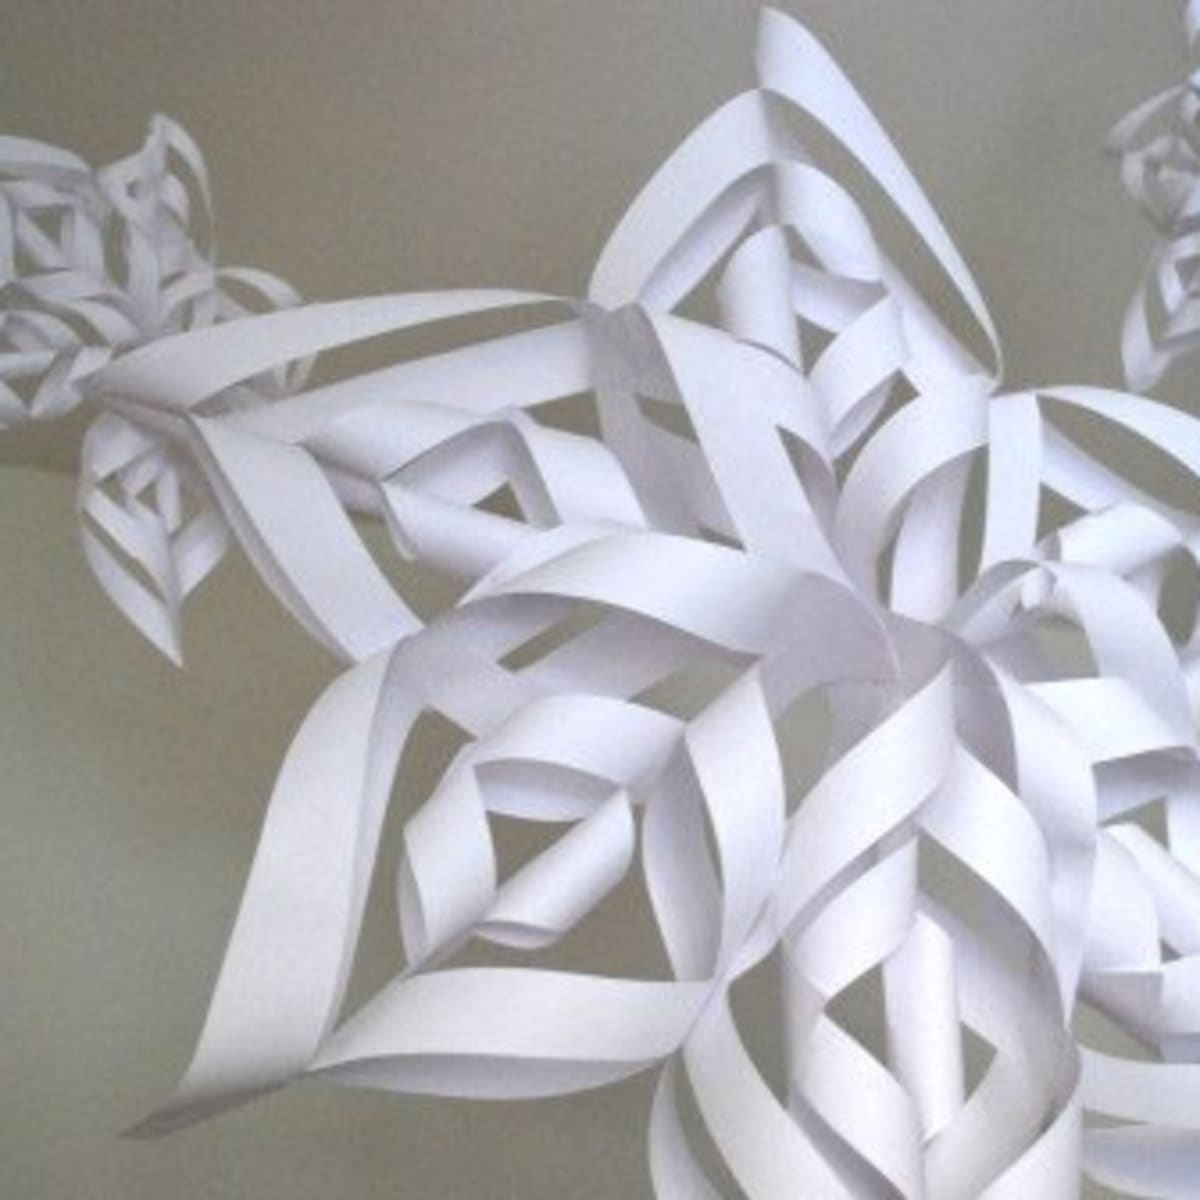 3D Paper Snowflakes: 6 Templates & Video Tutorial 